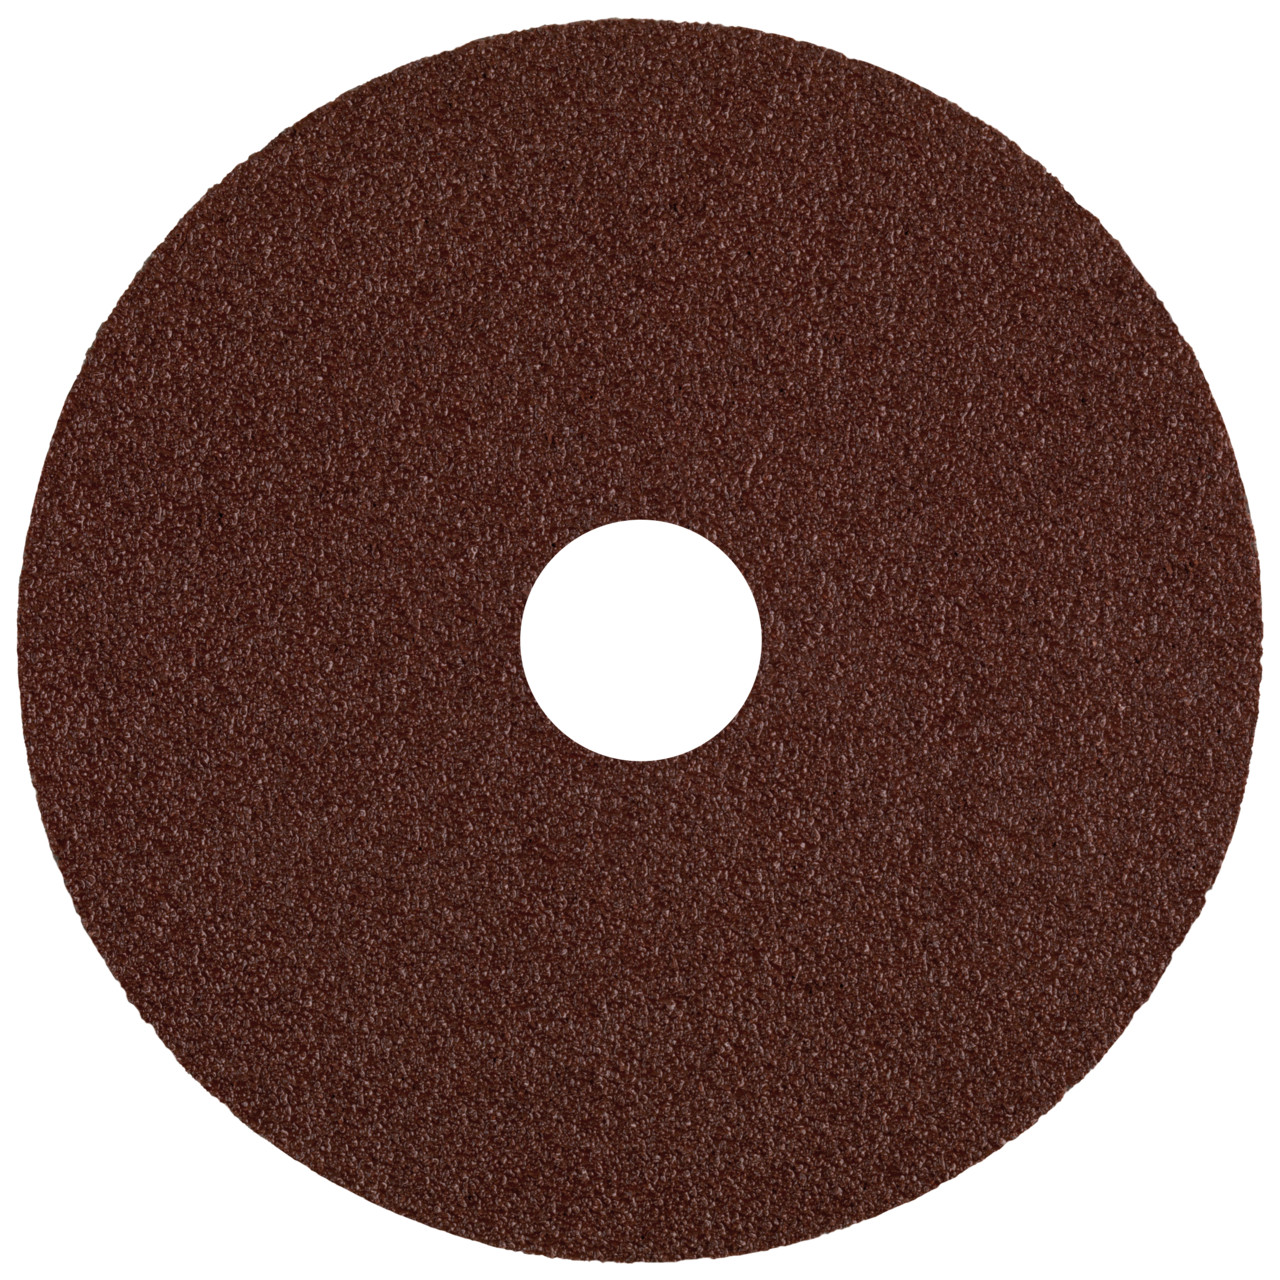 Tyrolit A-B02 V Vulcanised fibre disc DxH 115x22 For steel, non-ferrous metals and wood, P36, shape: DISC, Art. 34286492